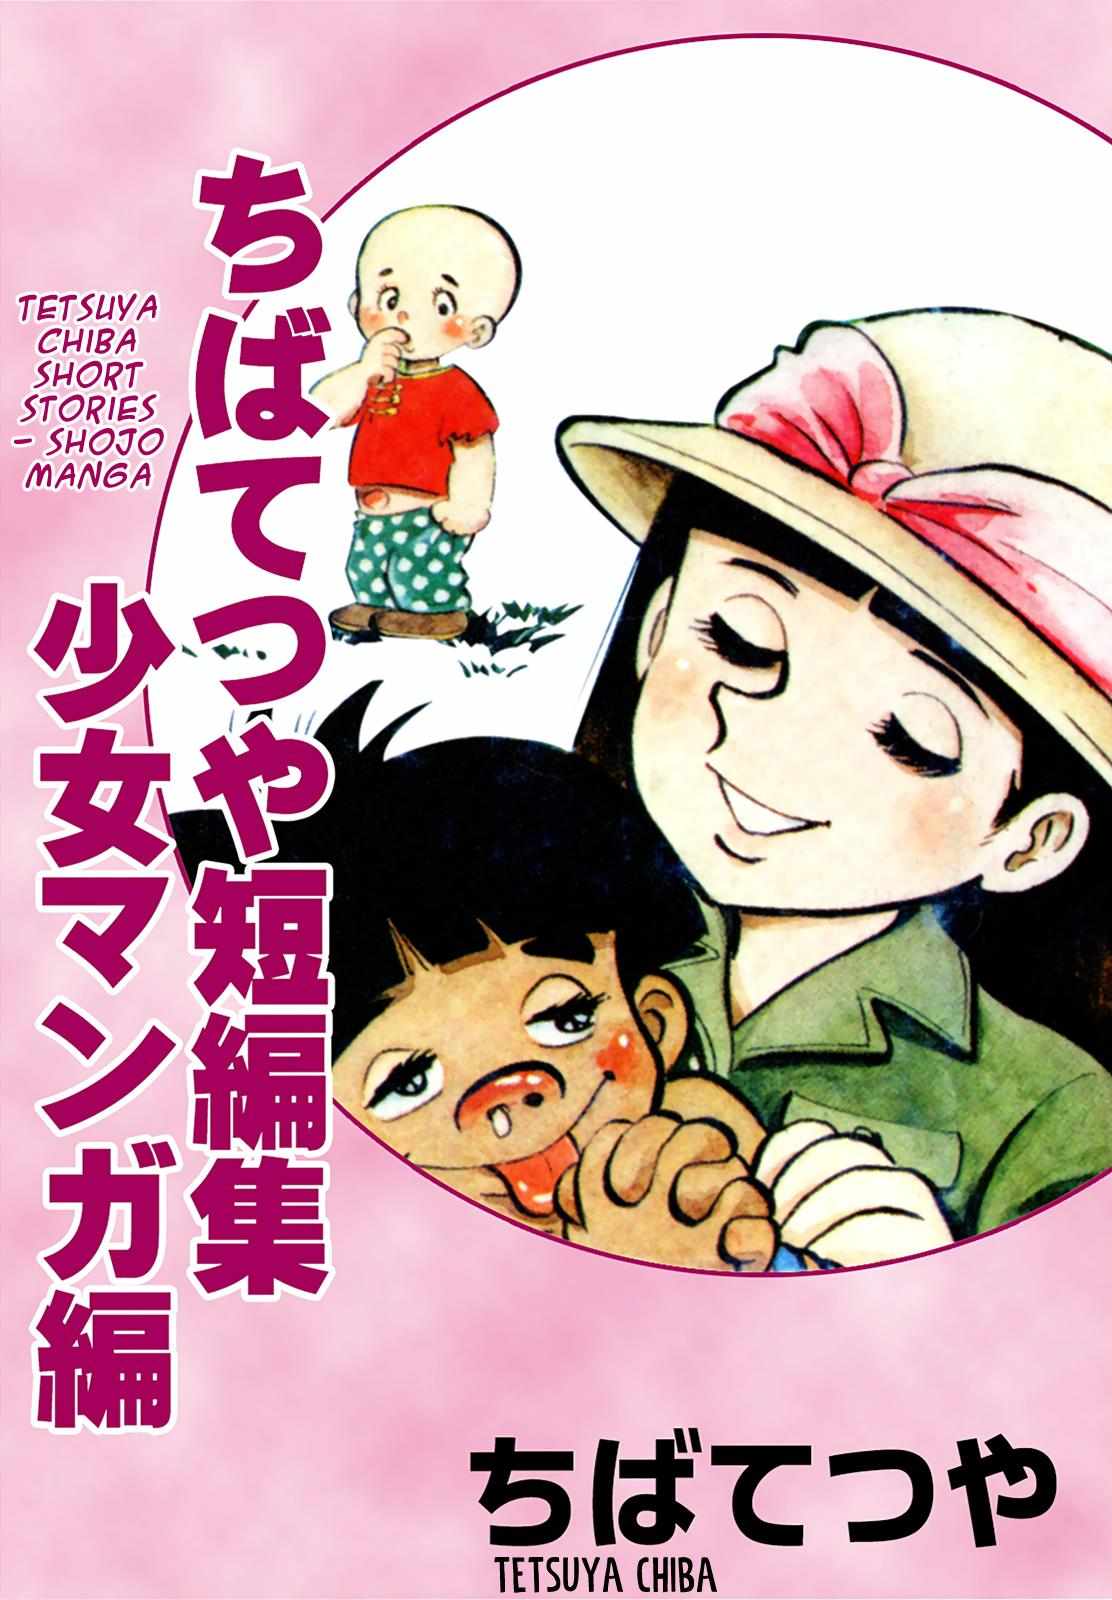 Tetsuya Chiba Short Stories - Shojo Manga - chapter 1 - #3